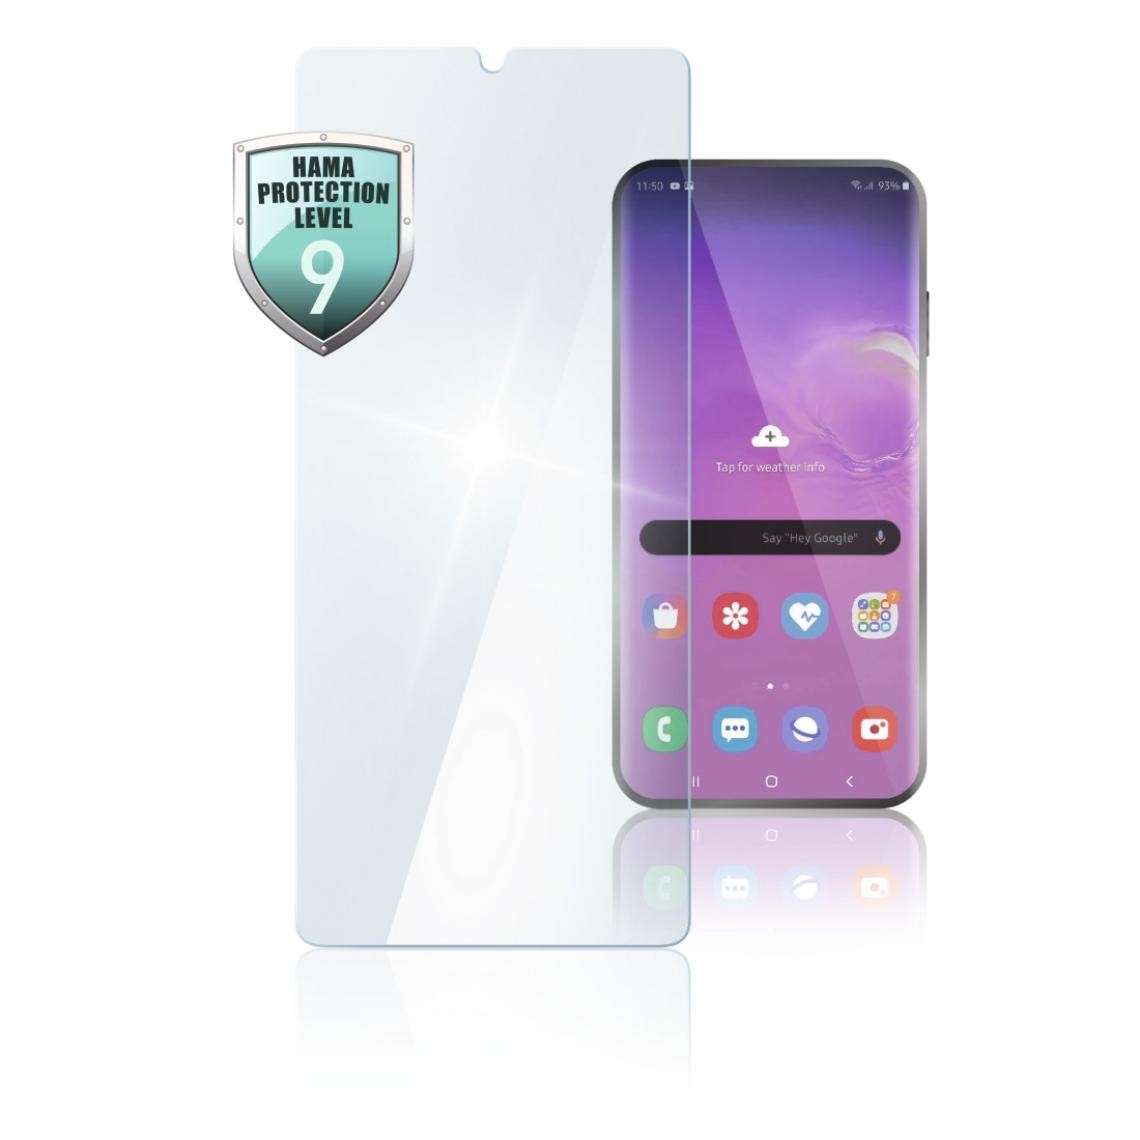 Hama - Protect. éc. verre vér. "Premium Crystal Glass" pr Samsung Galaxy A02s - Protection écran smartphone